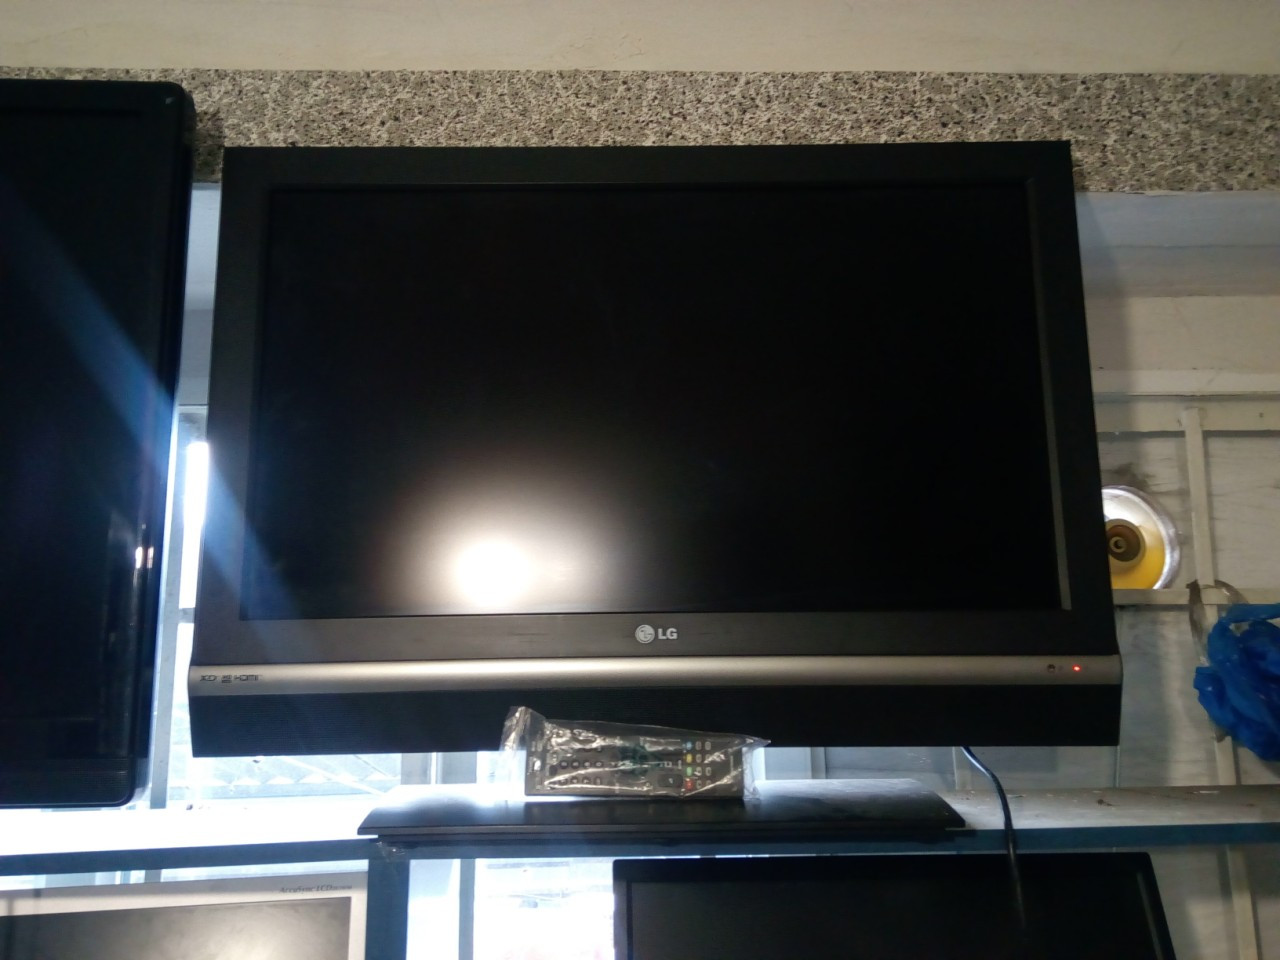 Б/У, Телевизор, LG 32LC2R, 32 дюйма: продажа, цена в Александрии.  Телевизоры от "КомпикОК - Европейская техника ТОП качества" - 1023513982